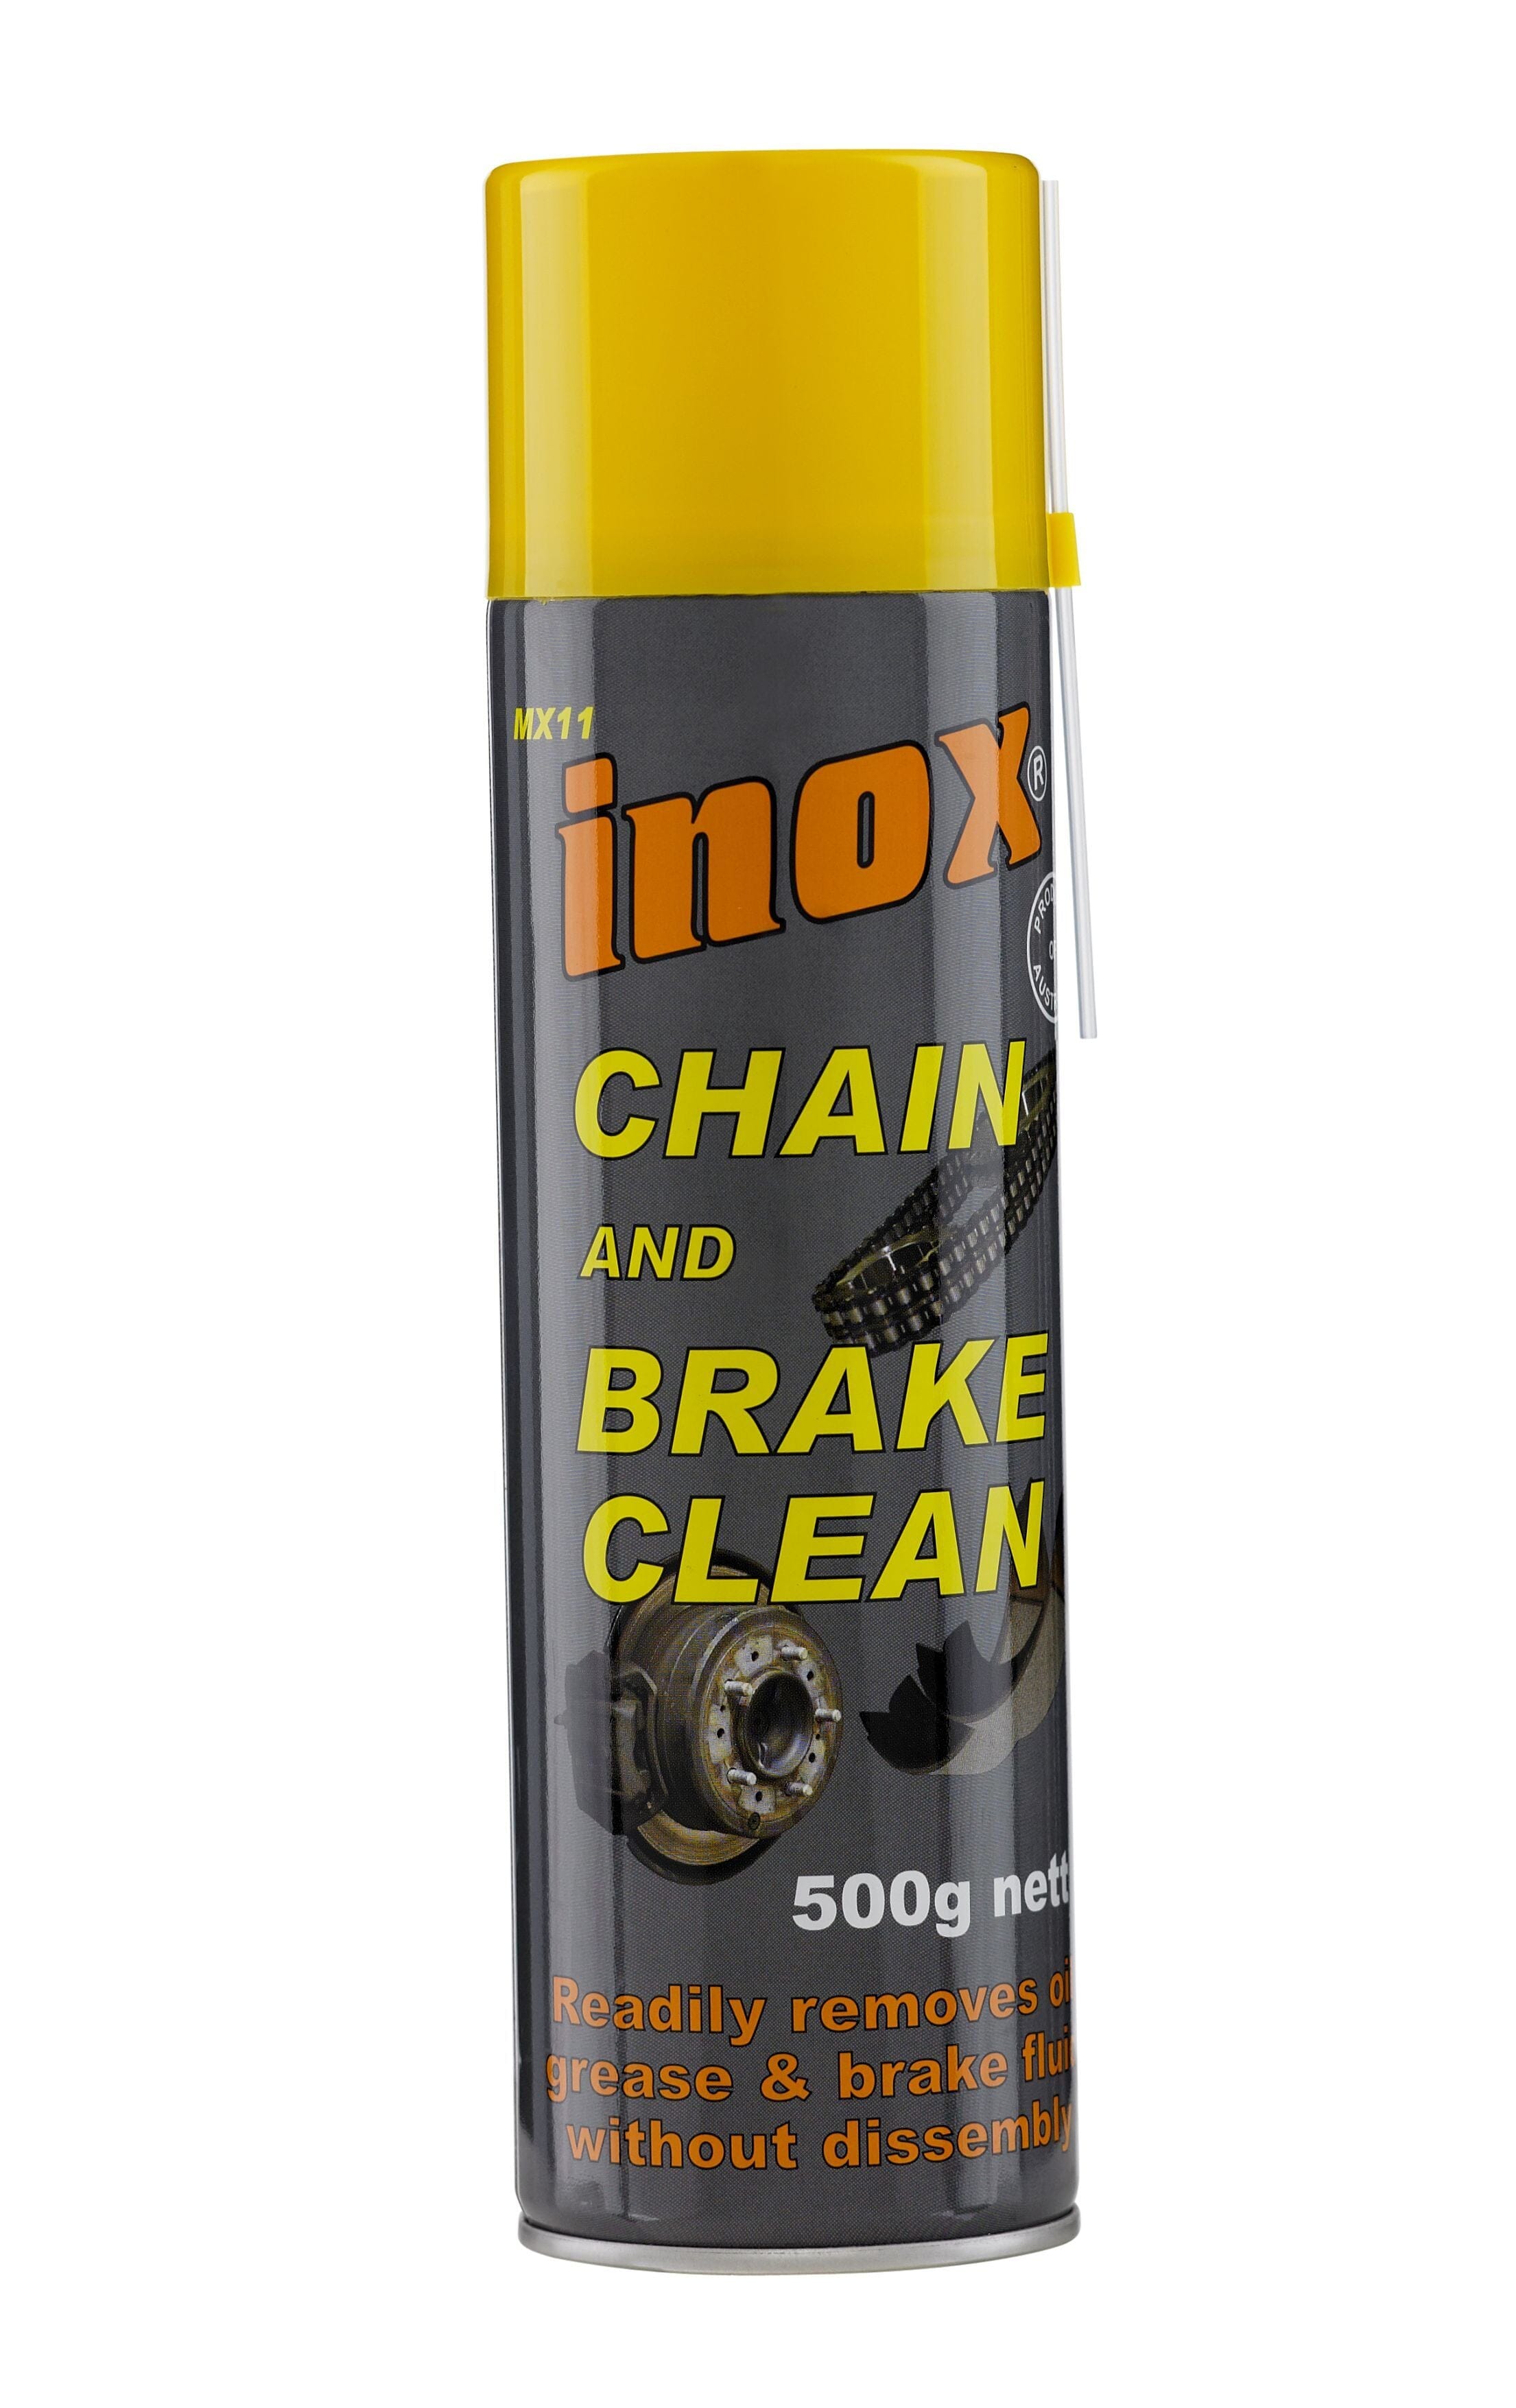 Inox MX11 Chain & Brake Clean - Aerosol 500gm